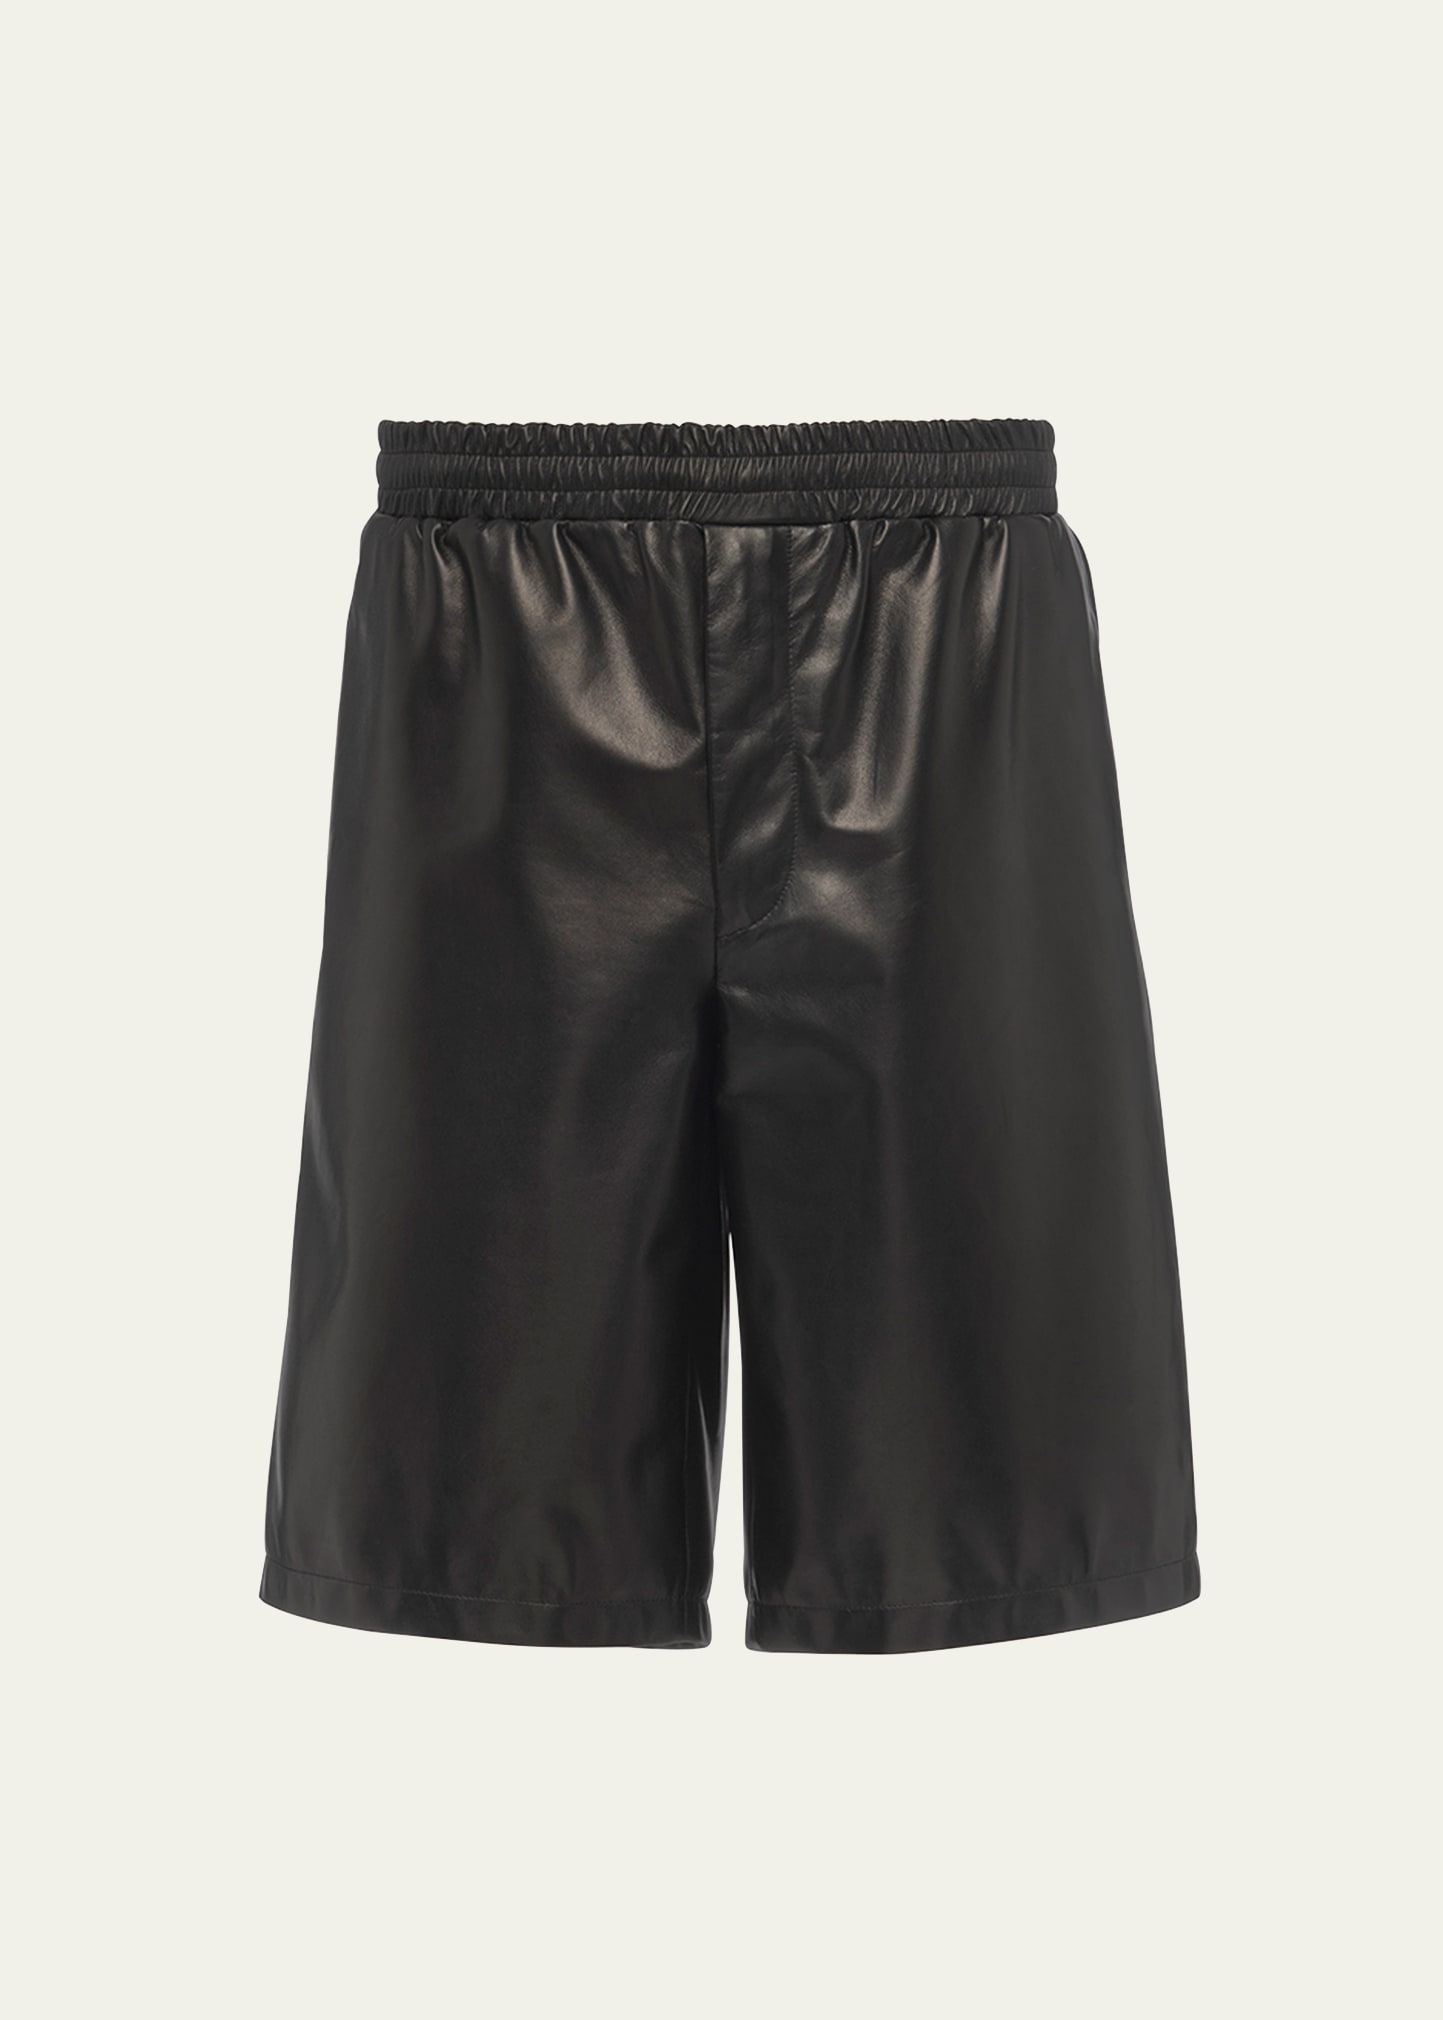 Prada Men's Napa Leather Bermuda Shorts